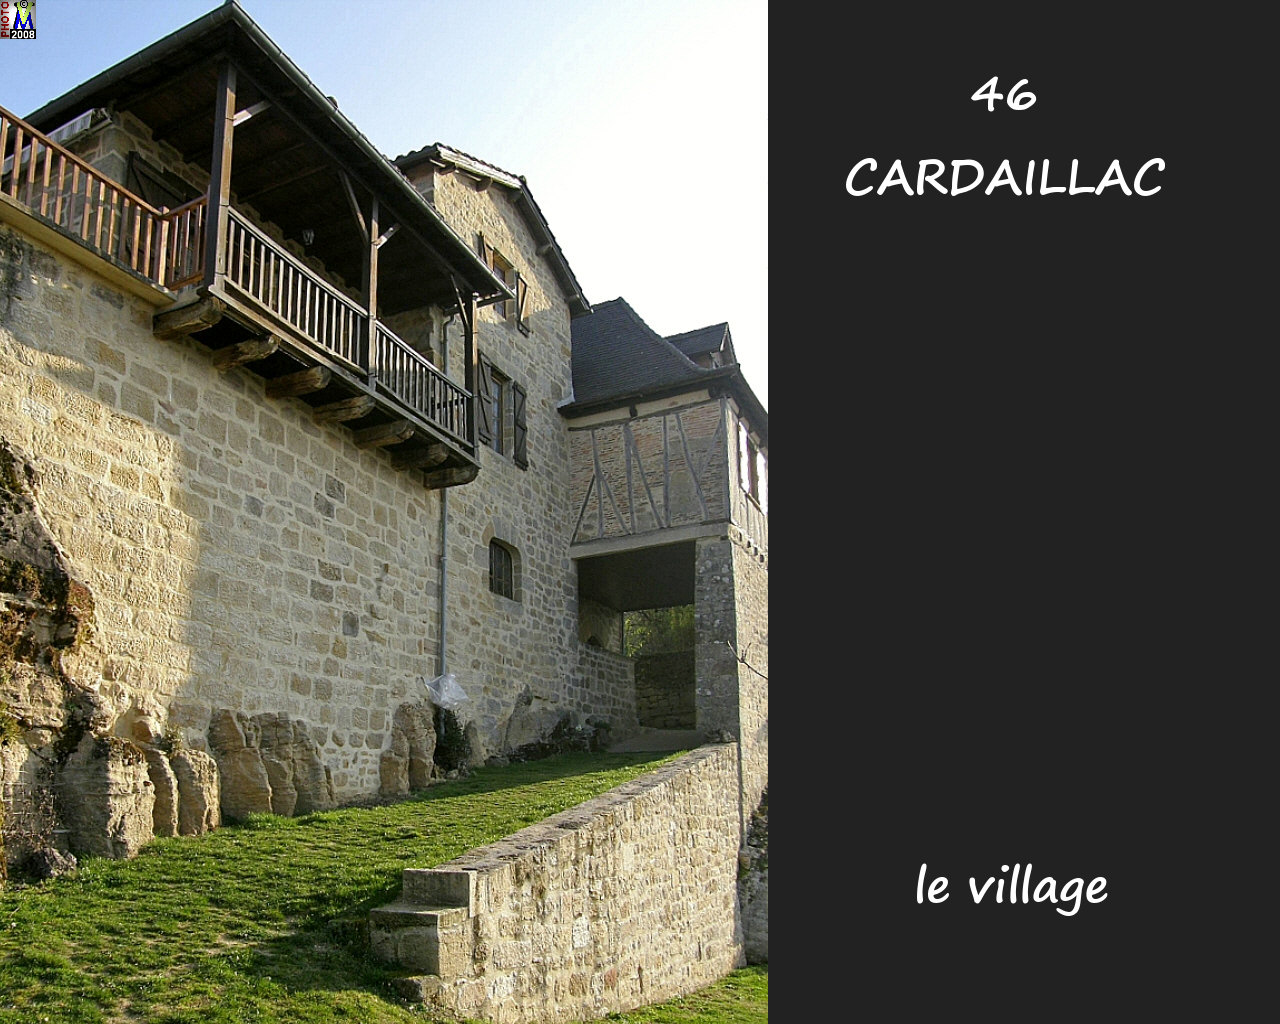 46CARDAILLAC_village_134.jpg